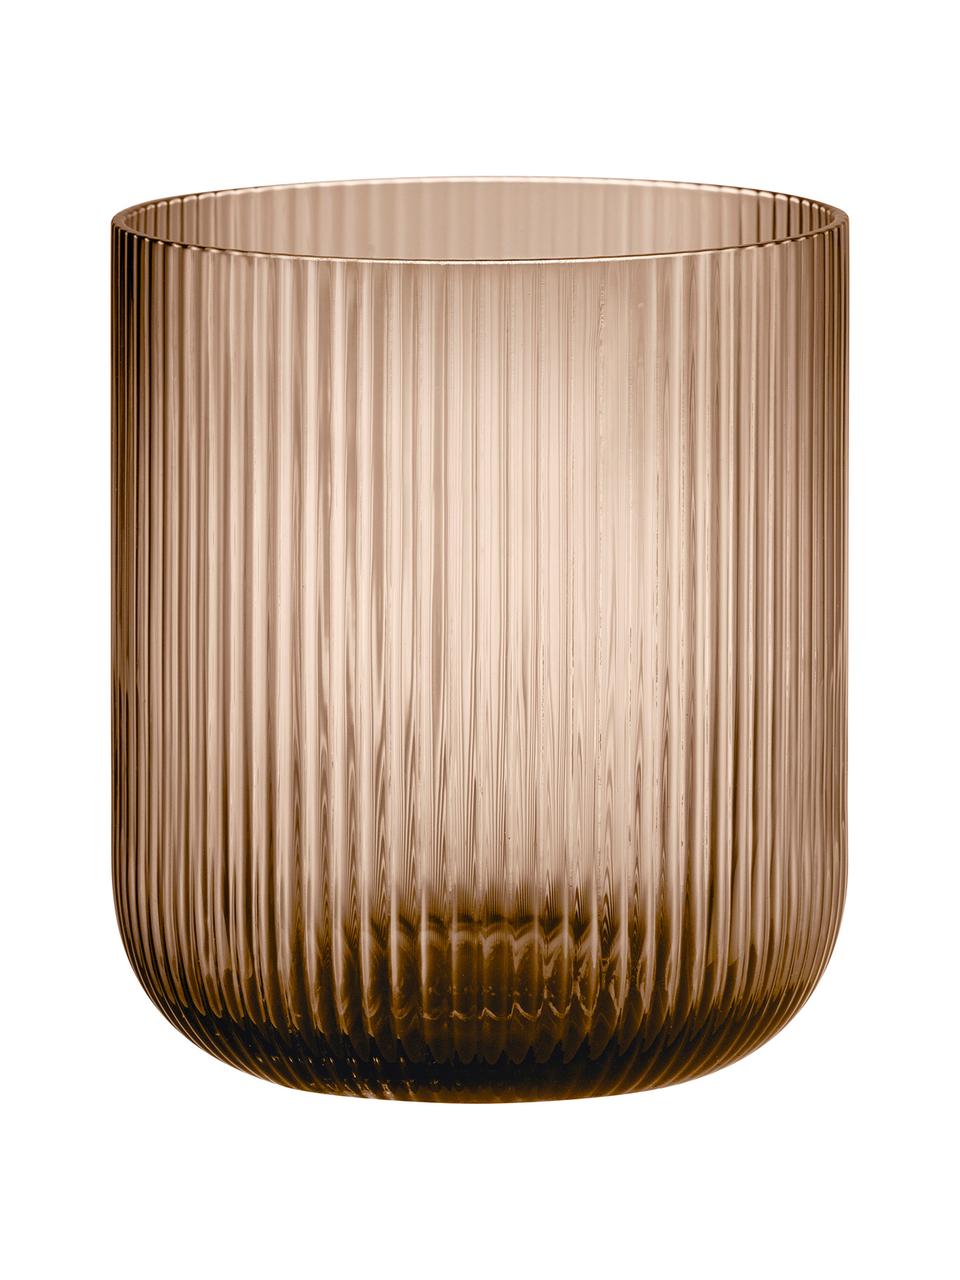 Windlicht Ven met groefreliëf, Glas, Amberkleurig, transparant, Ø 16 x H 16 cm